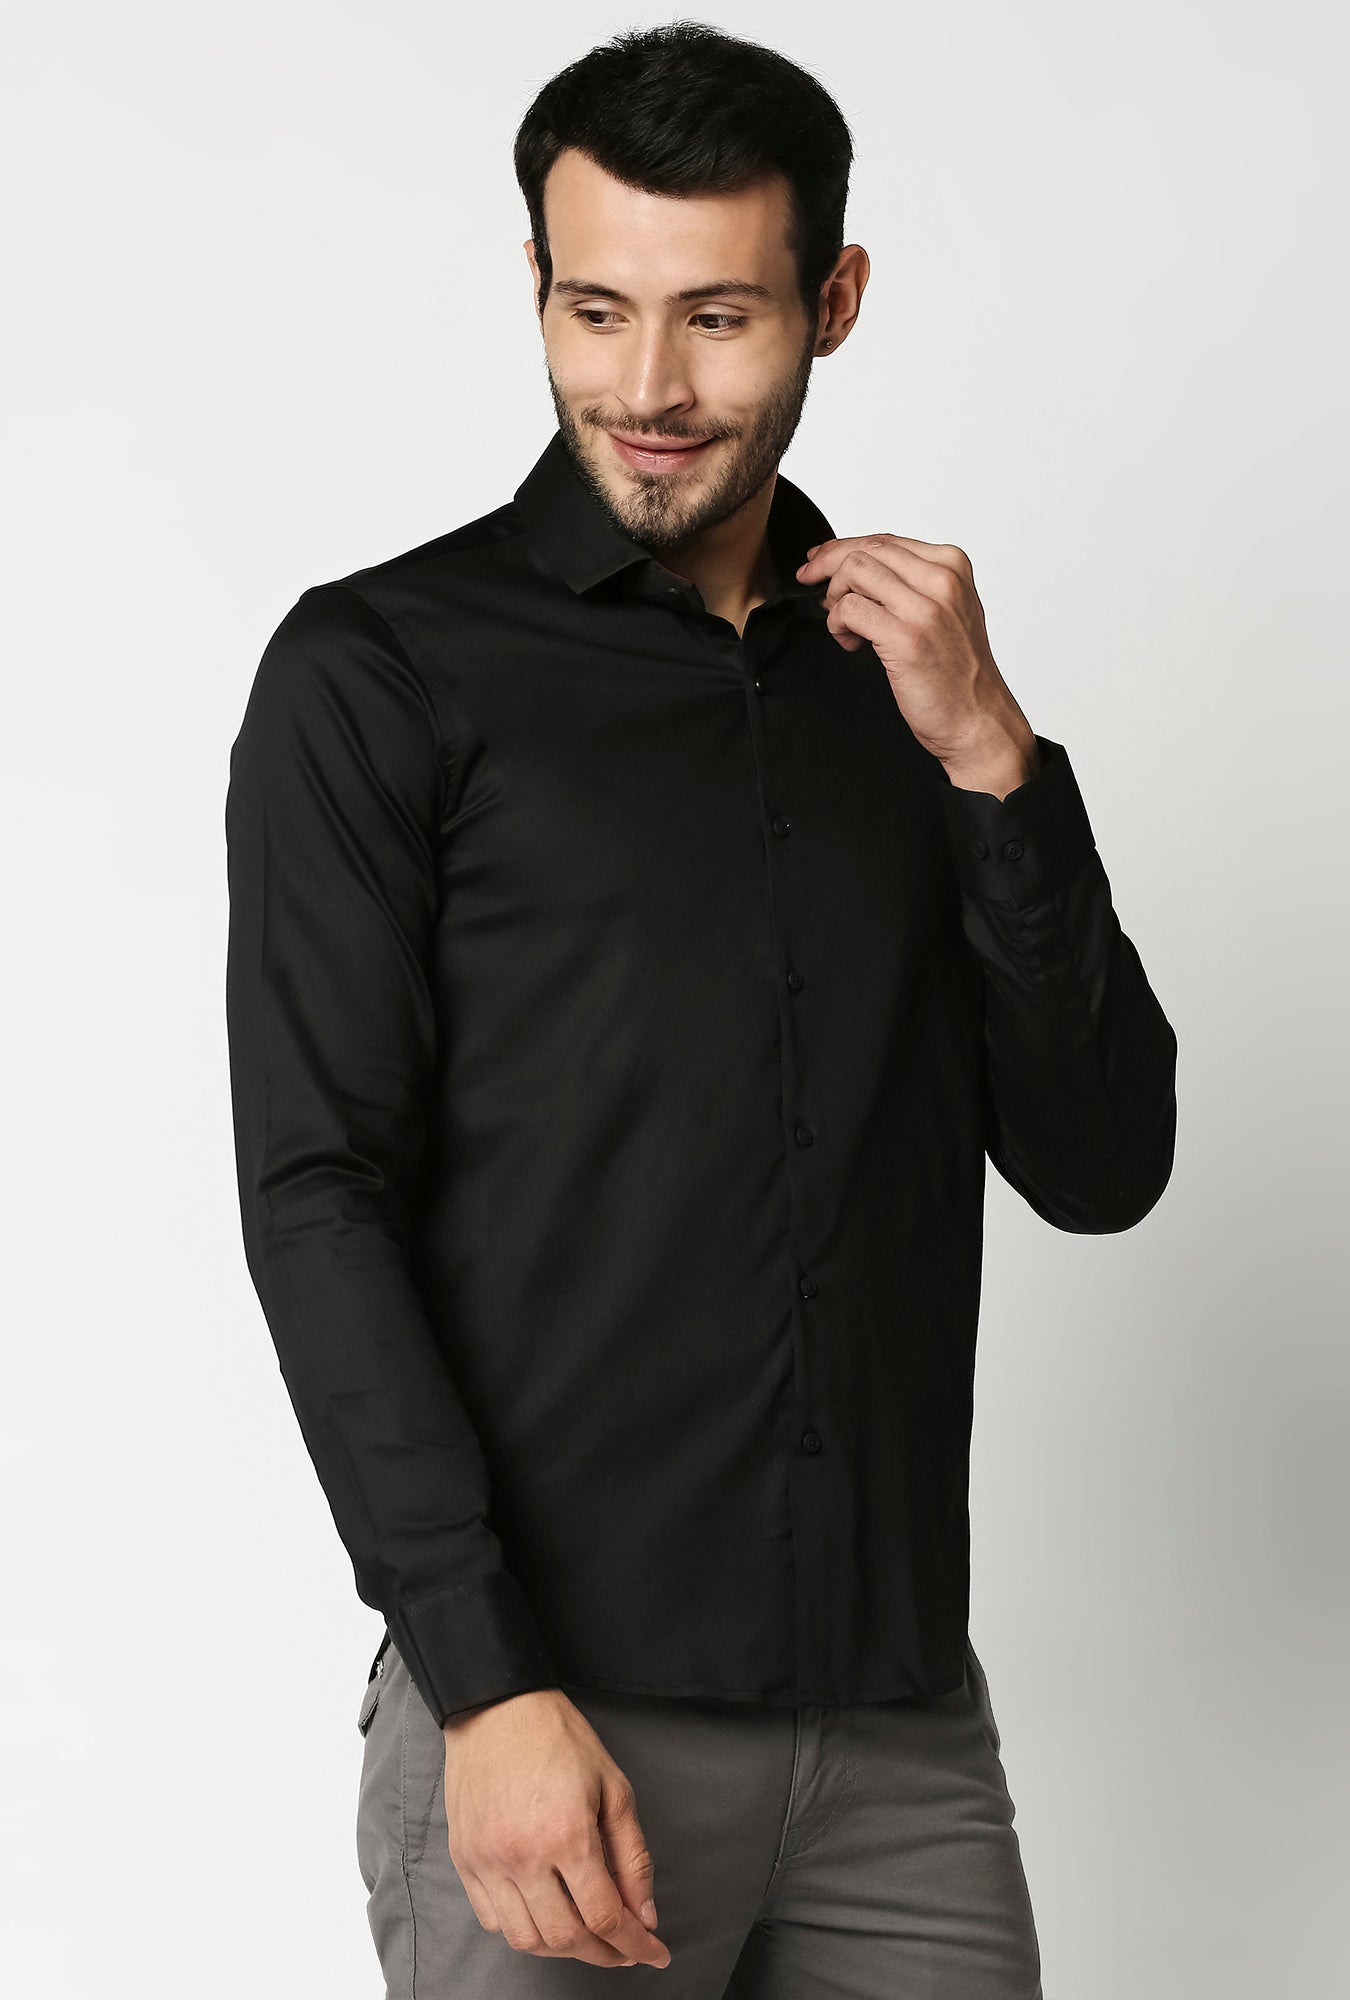 Fostino Plain Lycra Black Full Sleeves Shirt - Fostino - Shirts